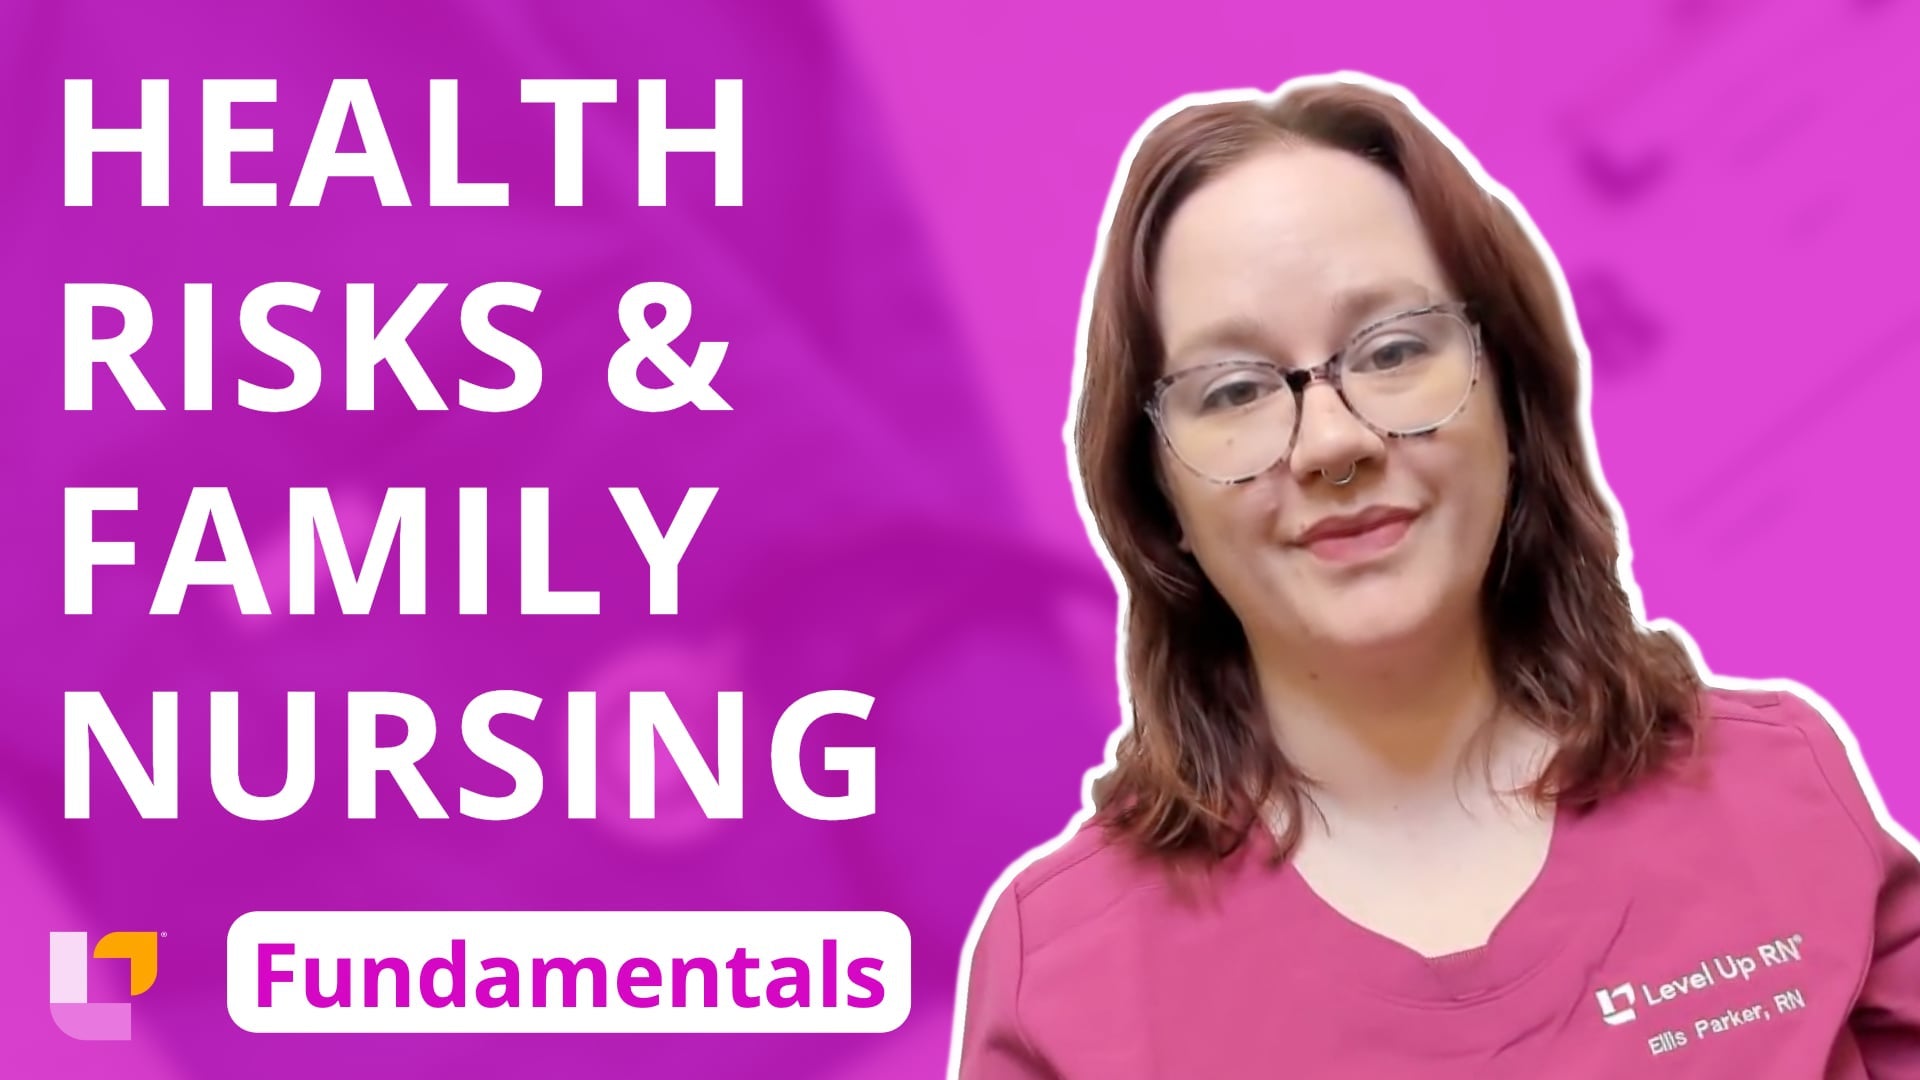 Fundamentals - Community Health, part 6: Health Risks and Family Nursing - LevelUpRN